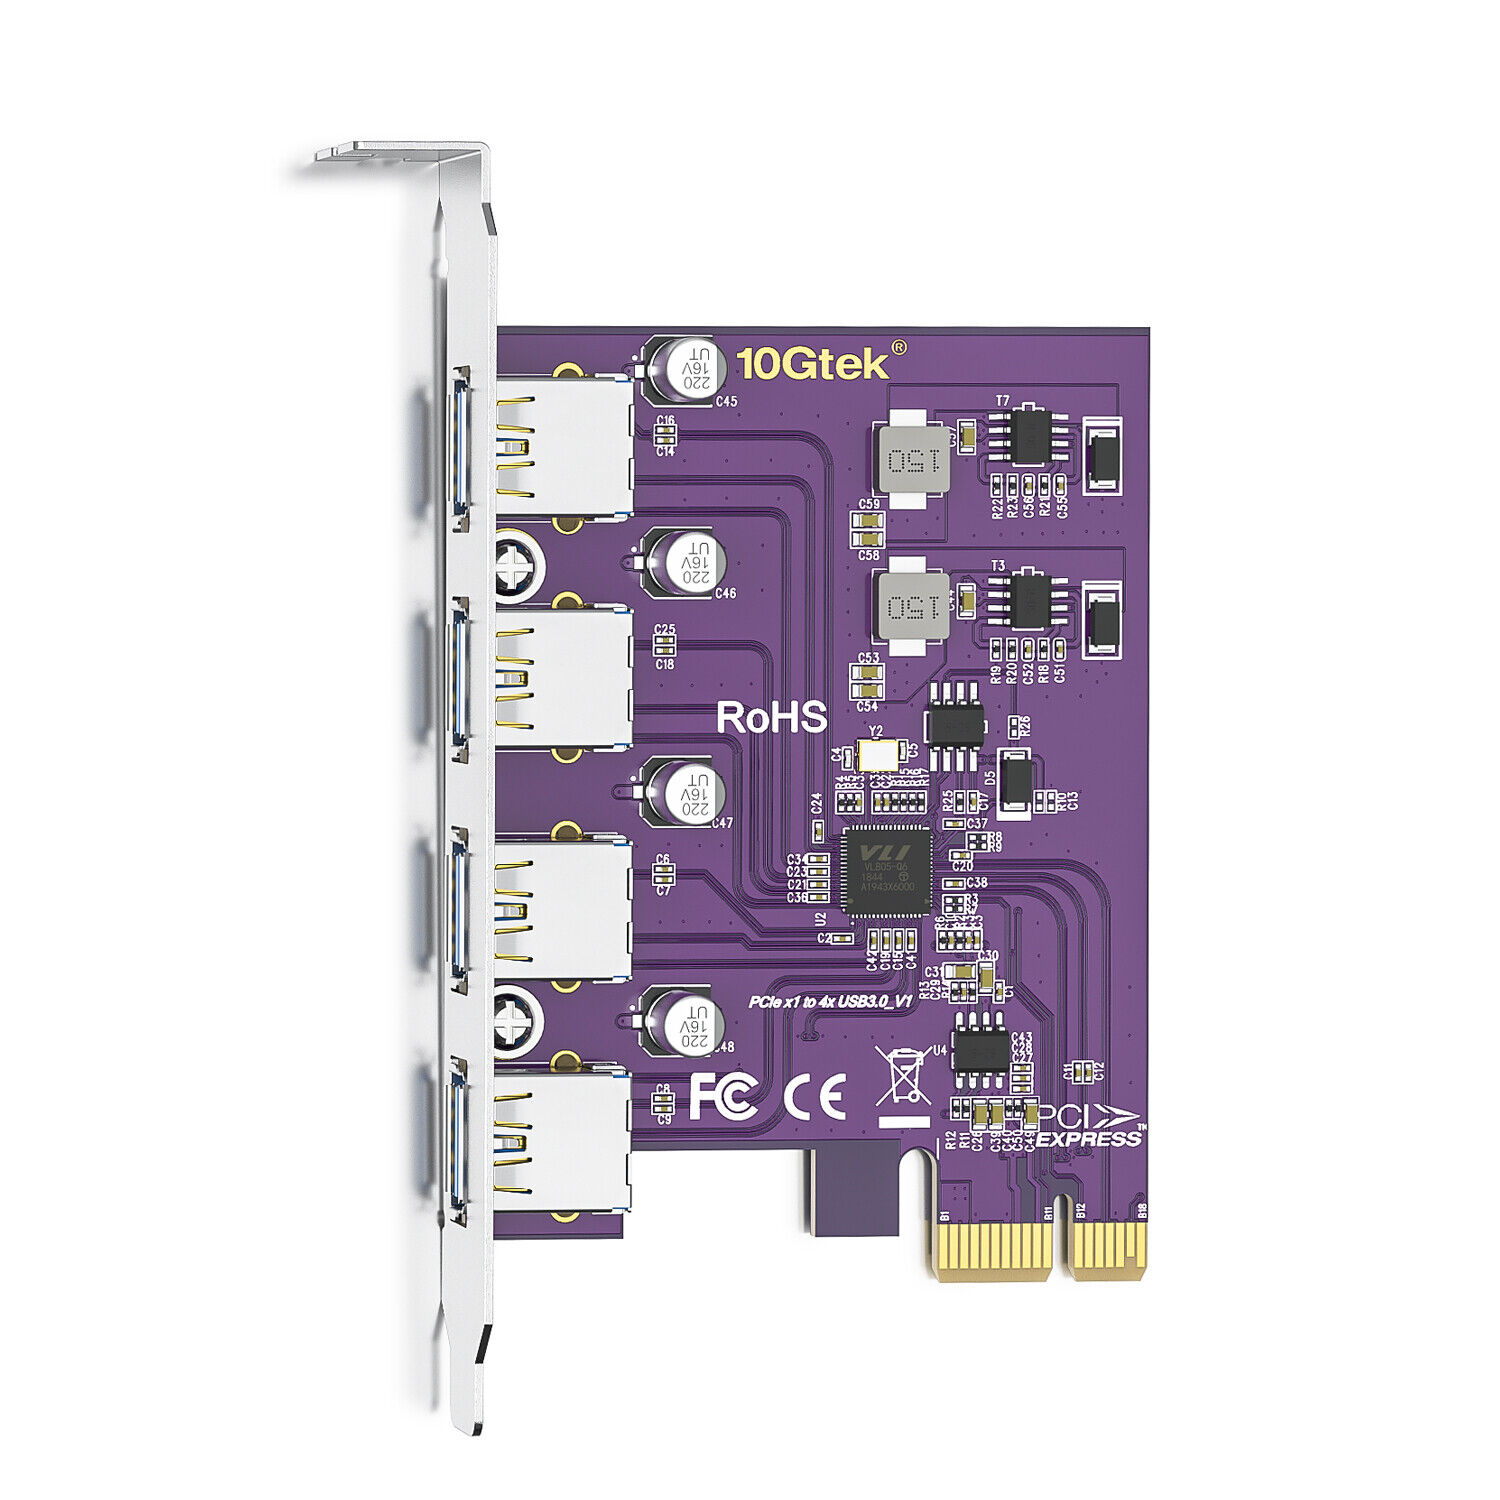 4 Port PCI-E to USB 3.0 HUB PCI Express Expansion Card Adapter